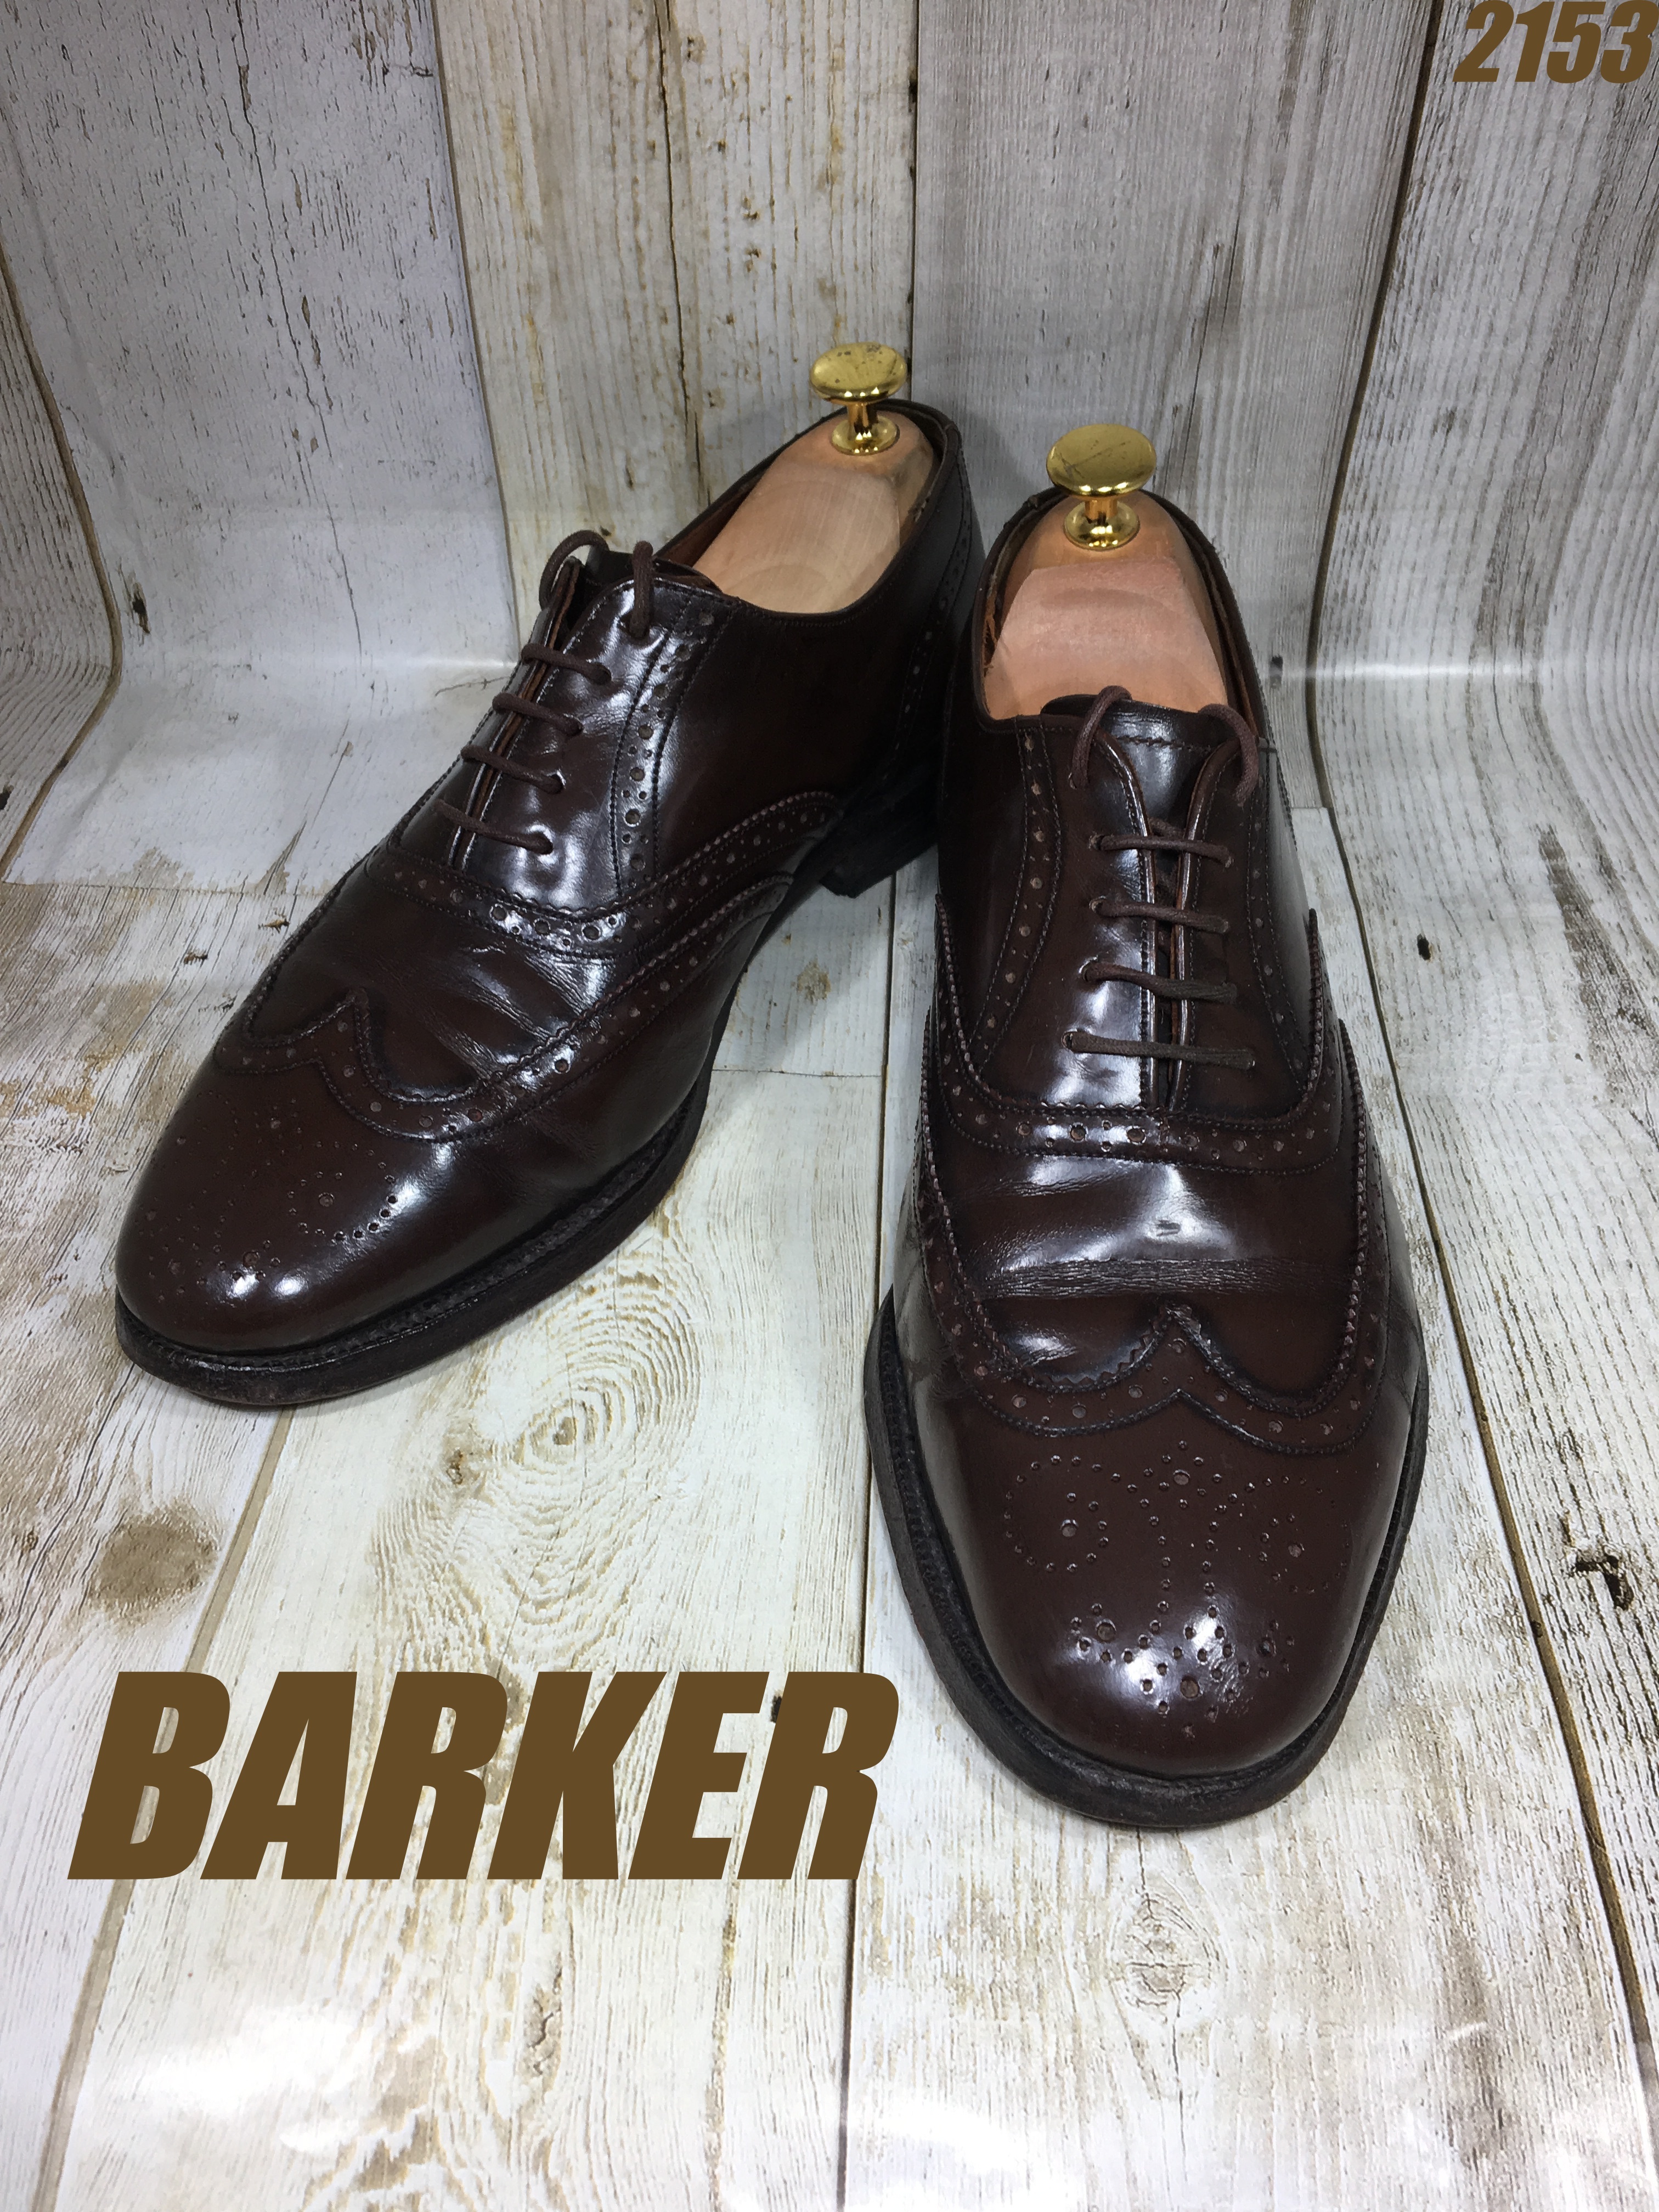 Barker バーカー フルブローグ Uk7 25 5cm 中古靴 革靴 ブーツ通販専門店 Dafsmart ダフスマート Online Shop